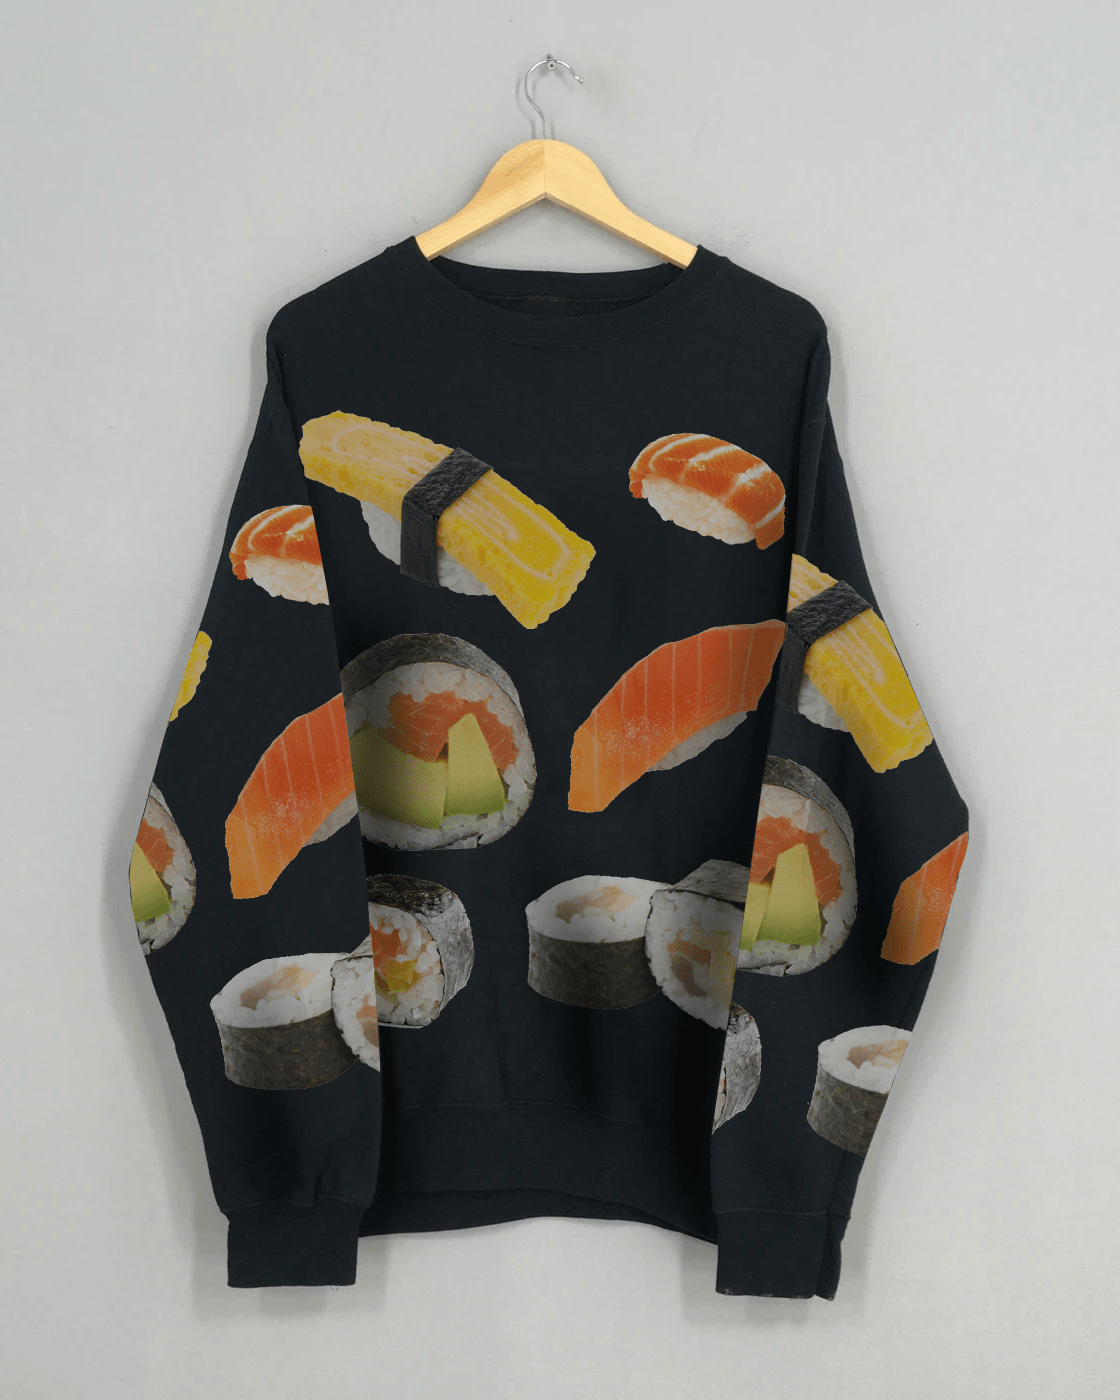 Super Sushi 2® Unisex Sweatshirt (8 pieces for sale) - Kikillo Club